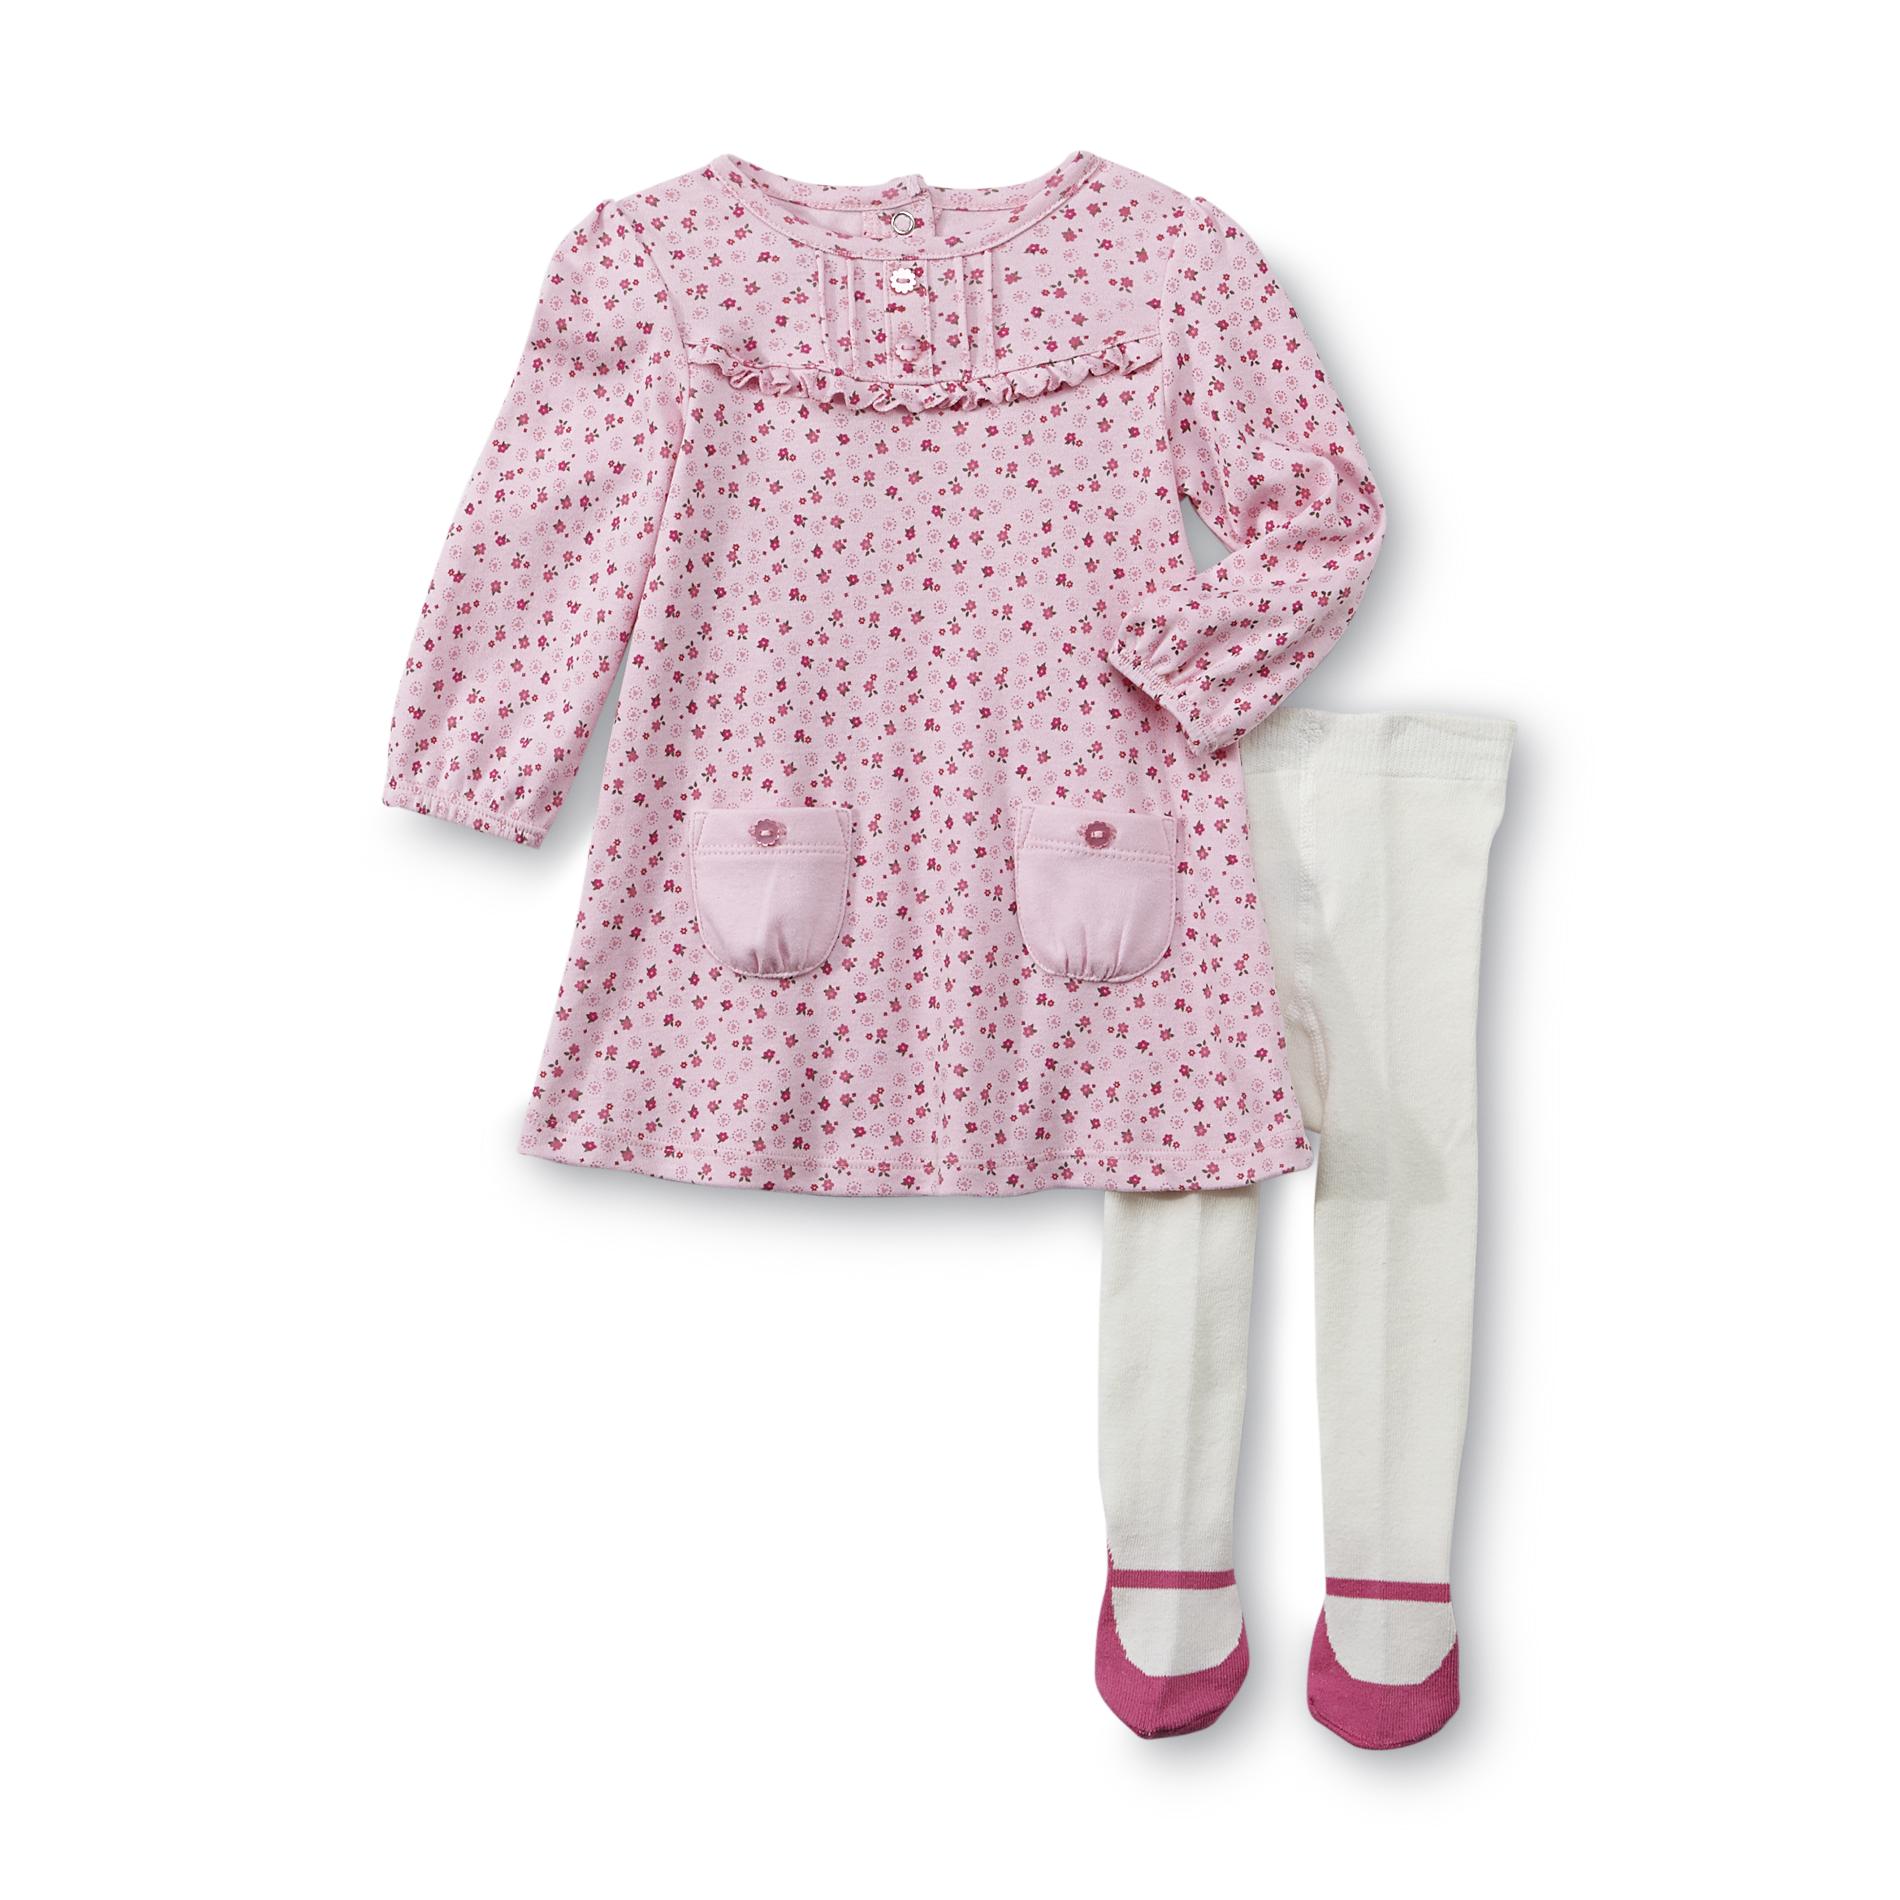 Little Wonders Newborn & Infant Girl's Dress & Tights - Floral